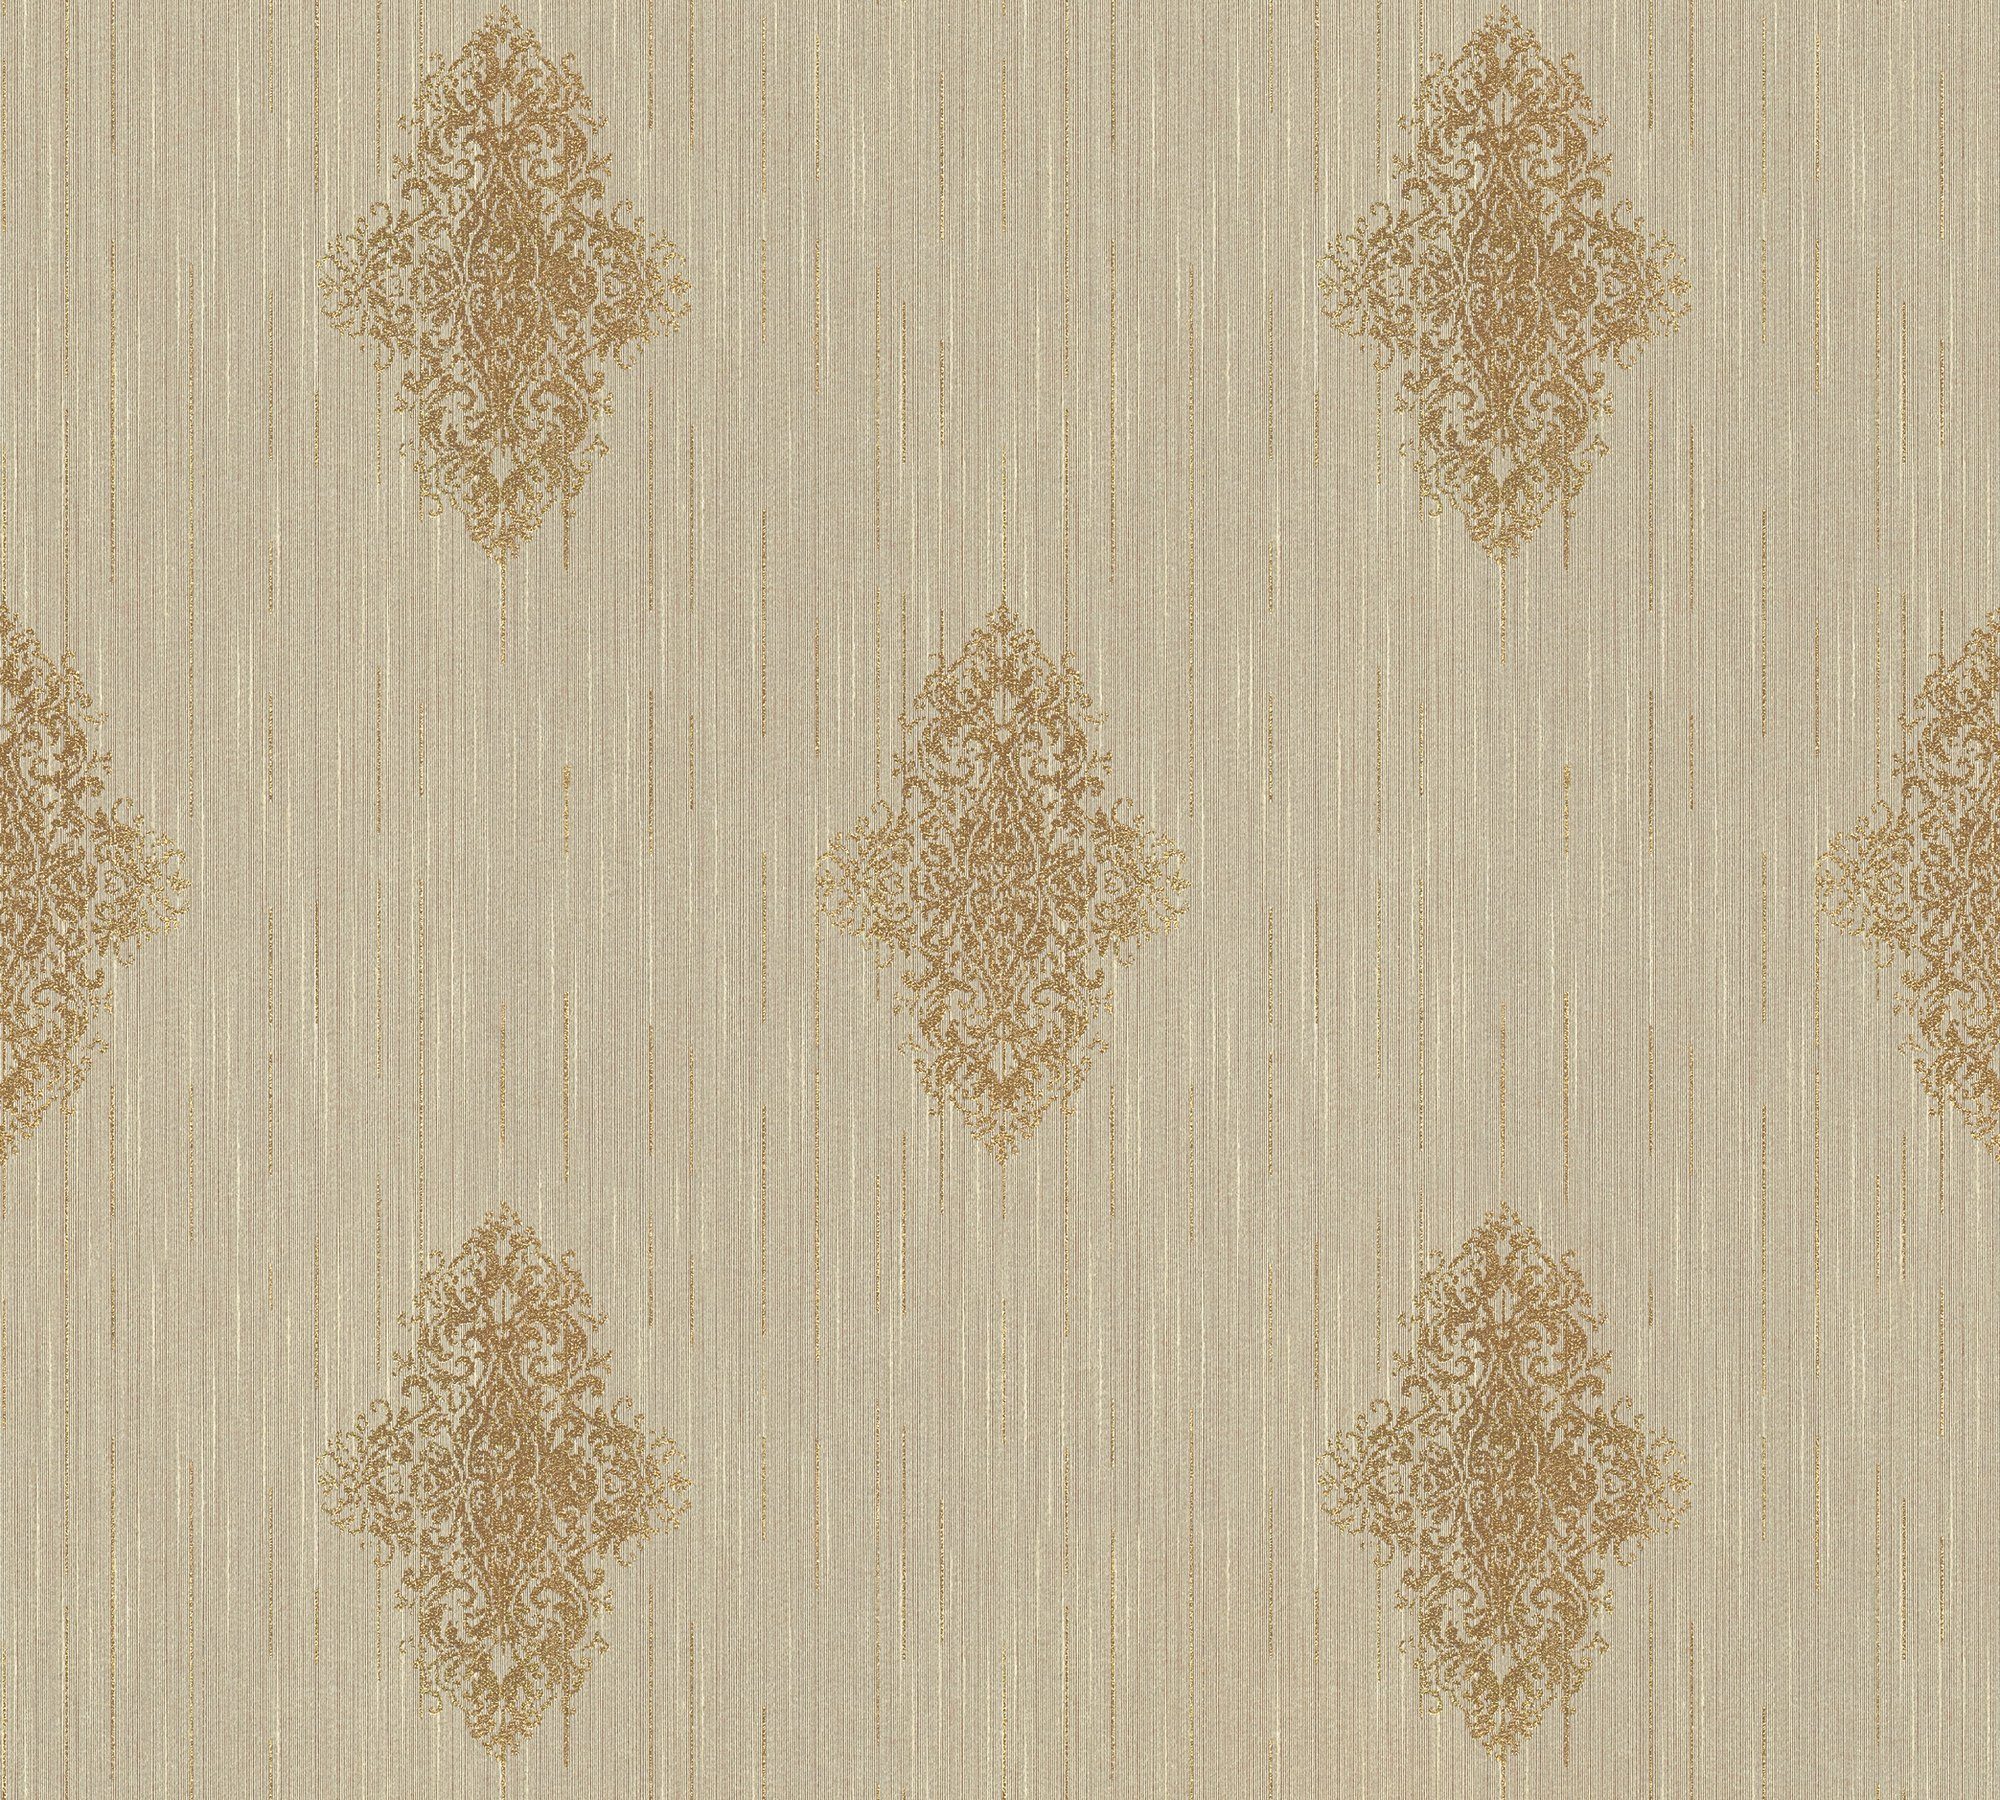 Paper wallpaper, Création A.S. Barock, Luxury beige/bronzefarben Effekt Textil samtig, Architects Tapete Barock Metallic Textiltapete